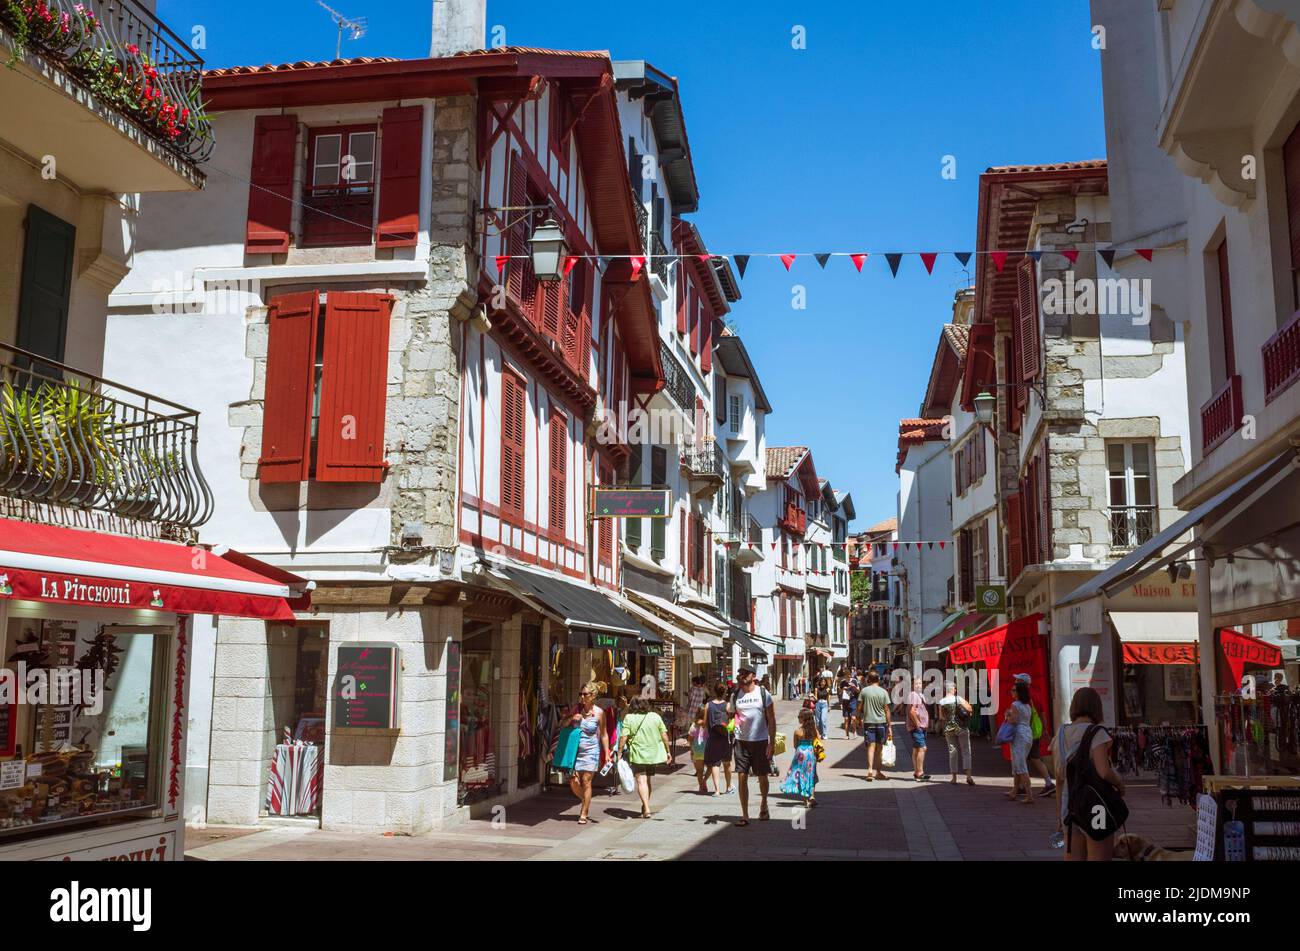 Saint Jean de Luz, French Basque Country, France - July 19th, 2019 : People walk along Rue Gambetta in the historic center of Saint Jean de Luz. Stock Photo